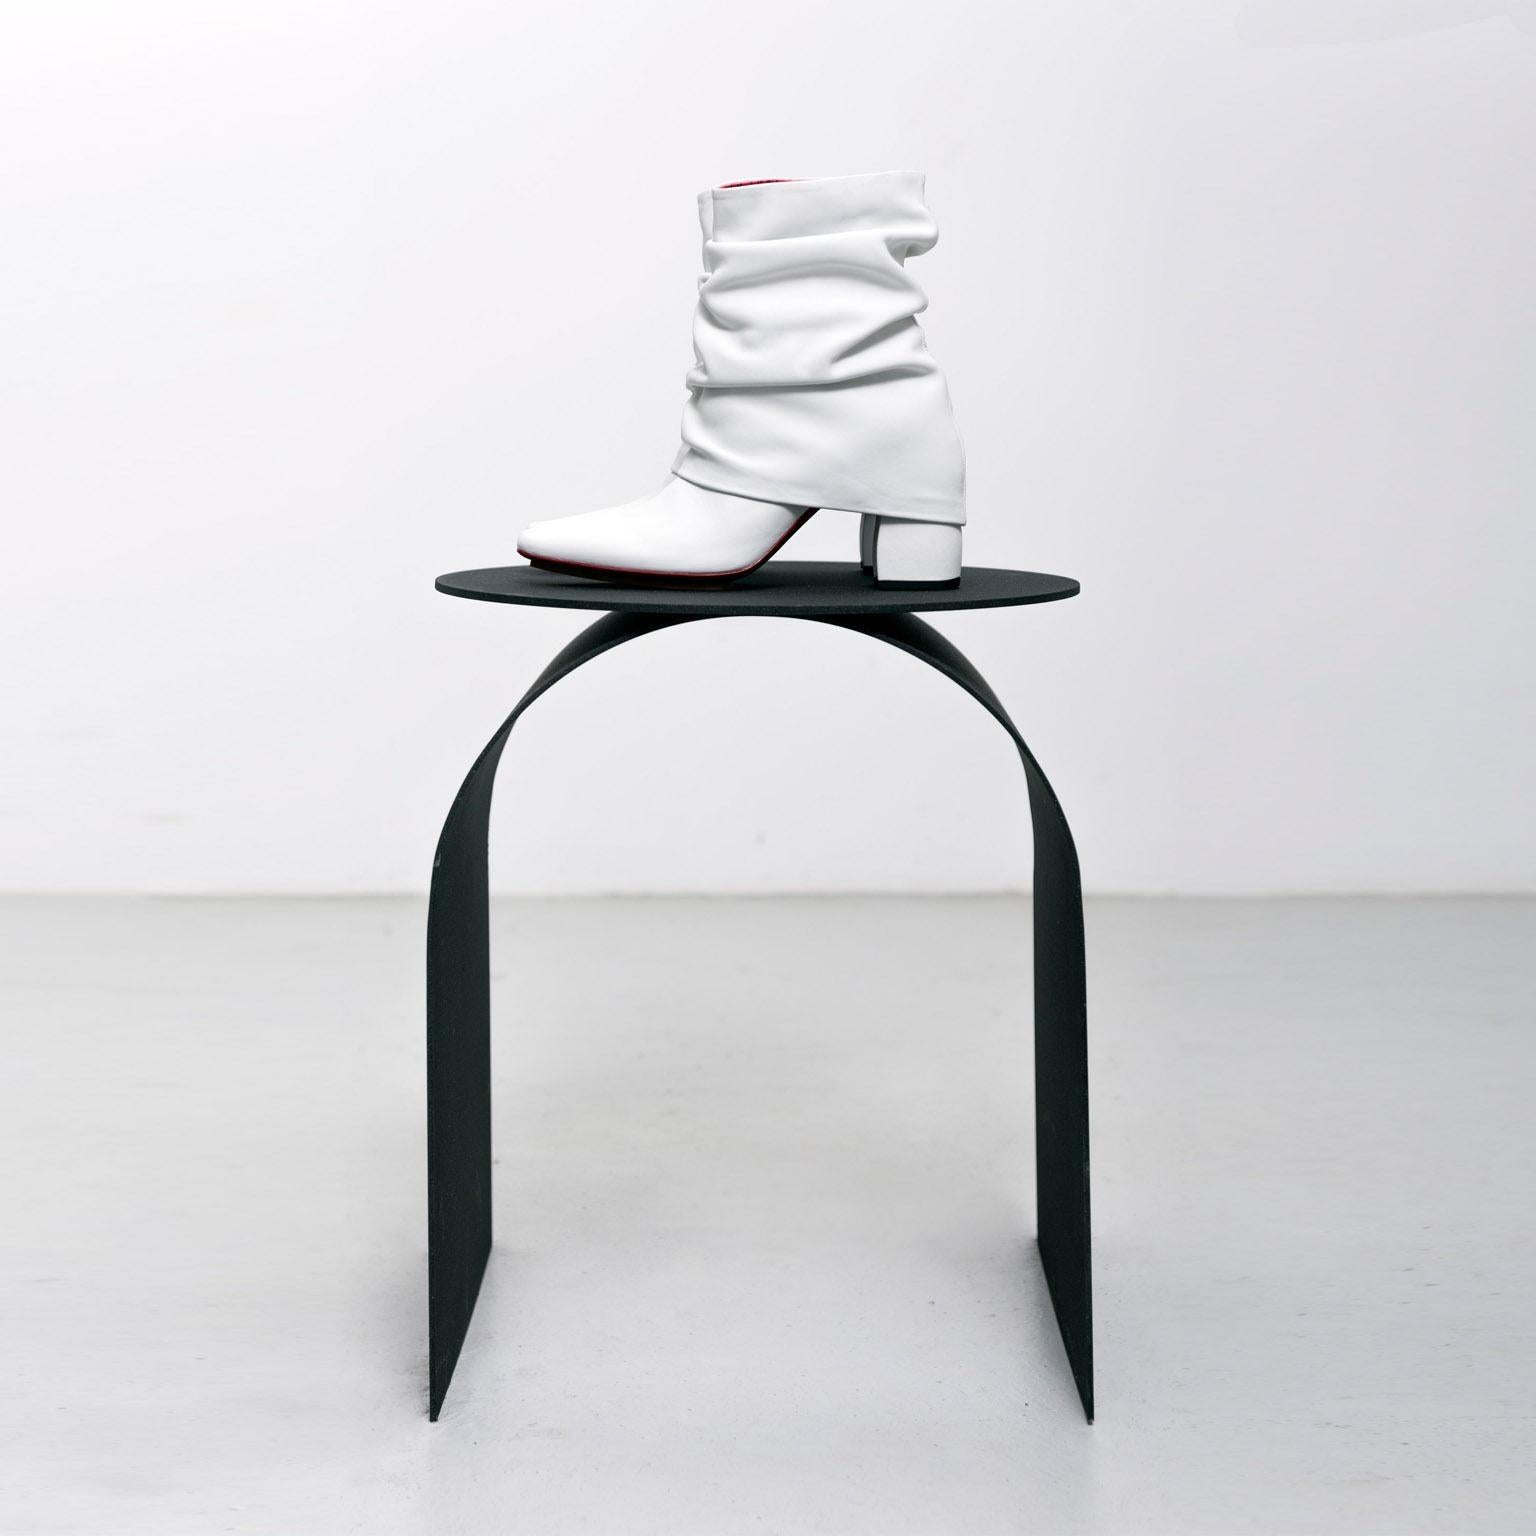 Spinzi Palladium Sculptural Side Table, Black Metal, Collectible Italian Design For Sale 2